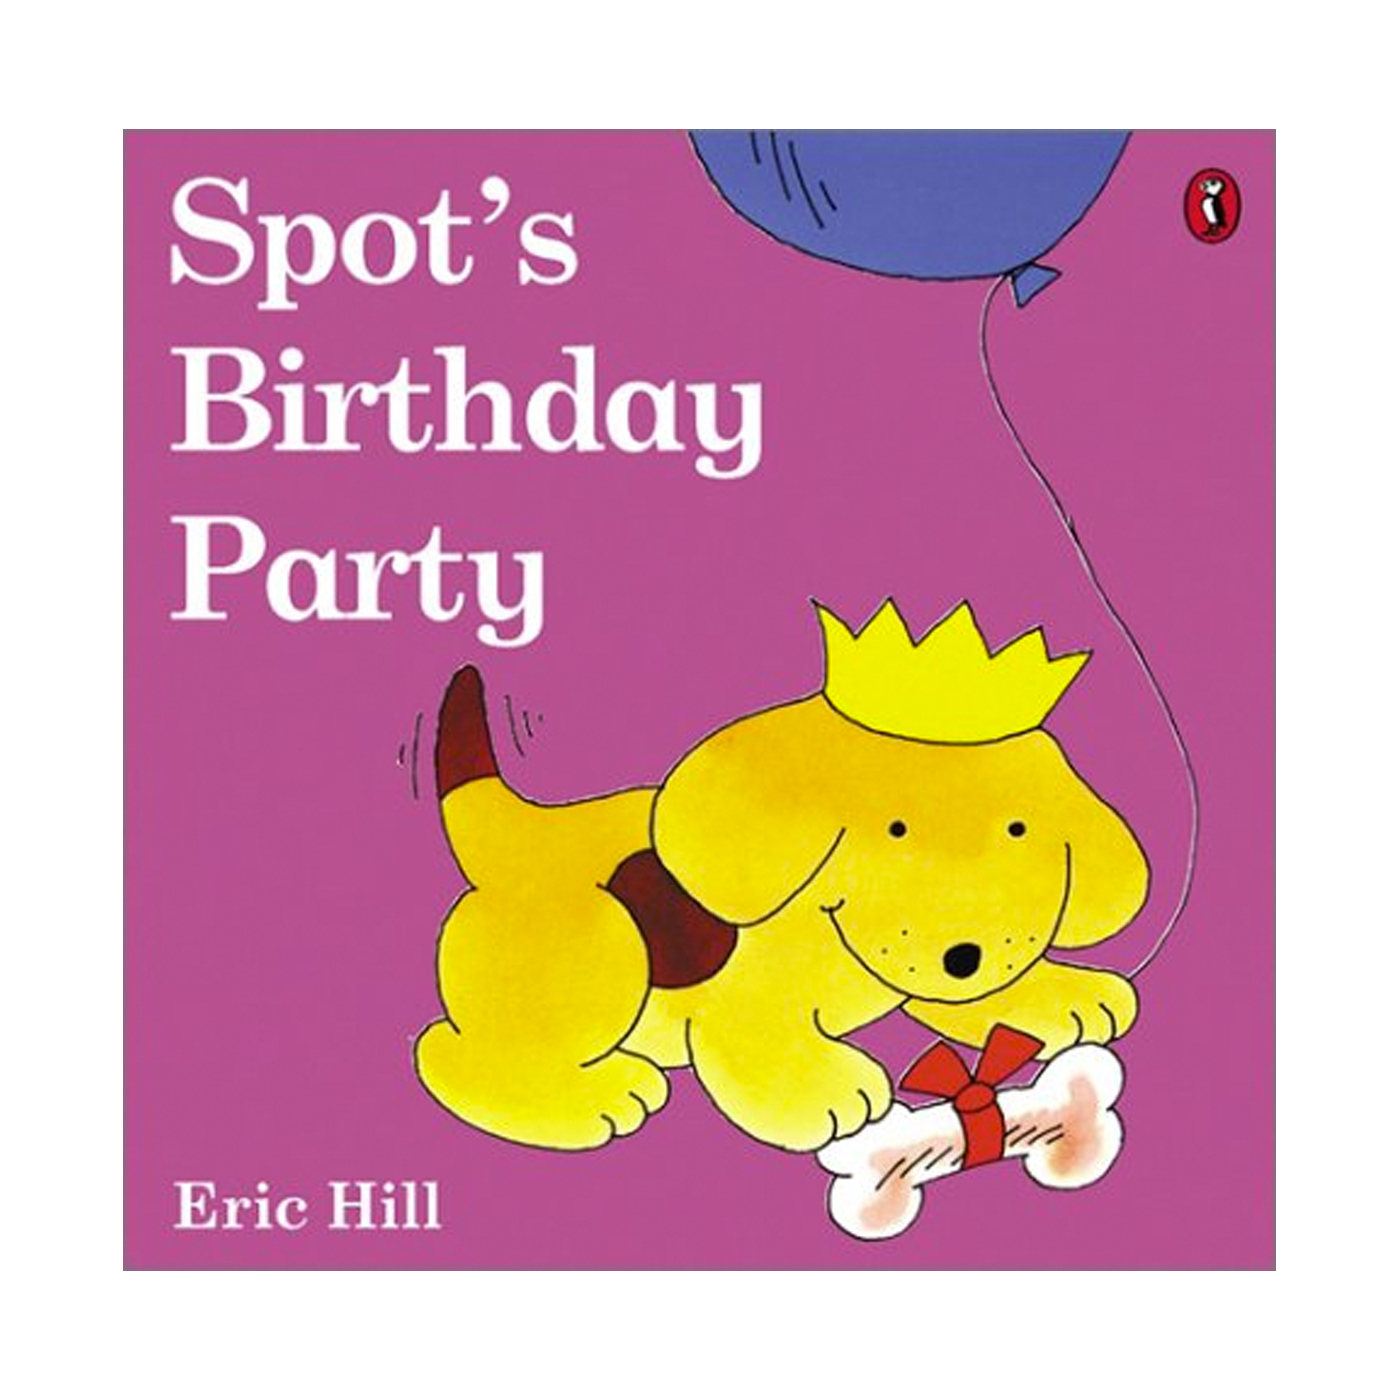  Spot's Birthday Party